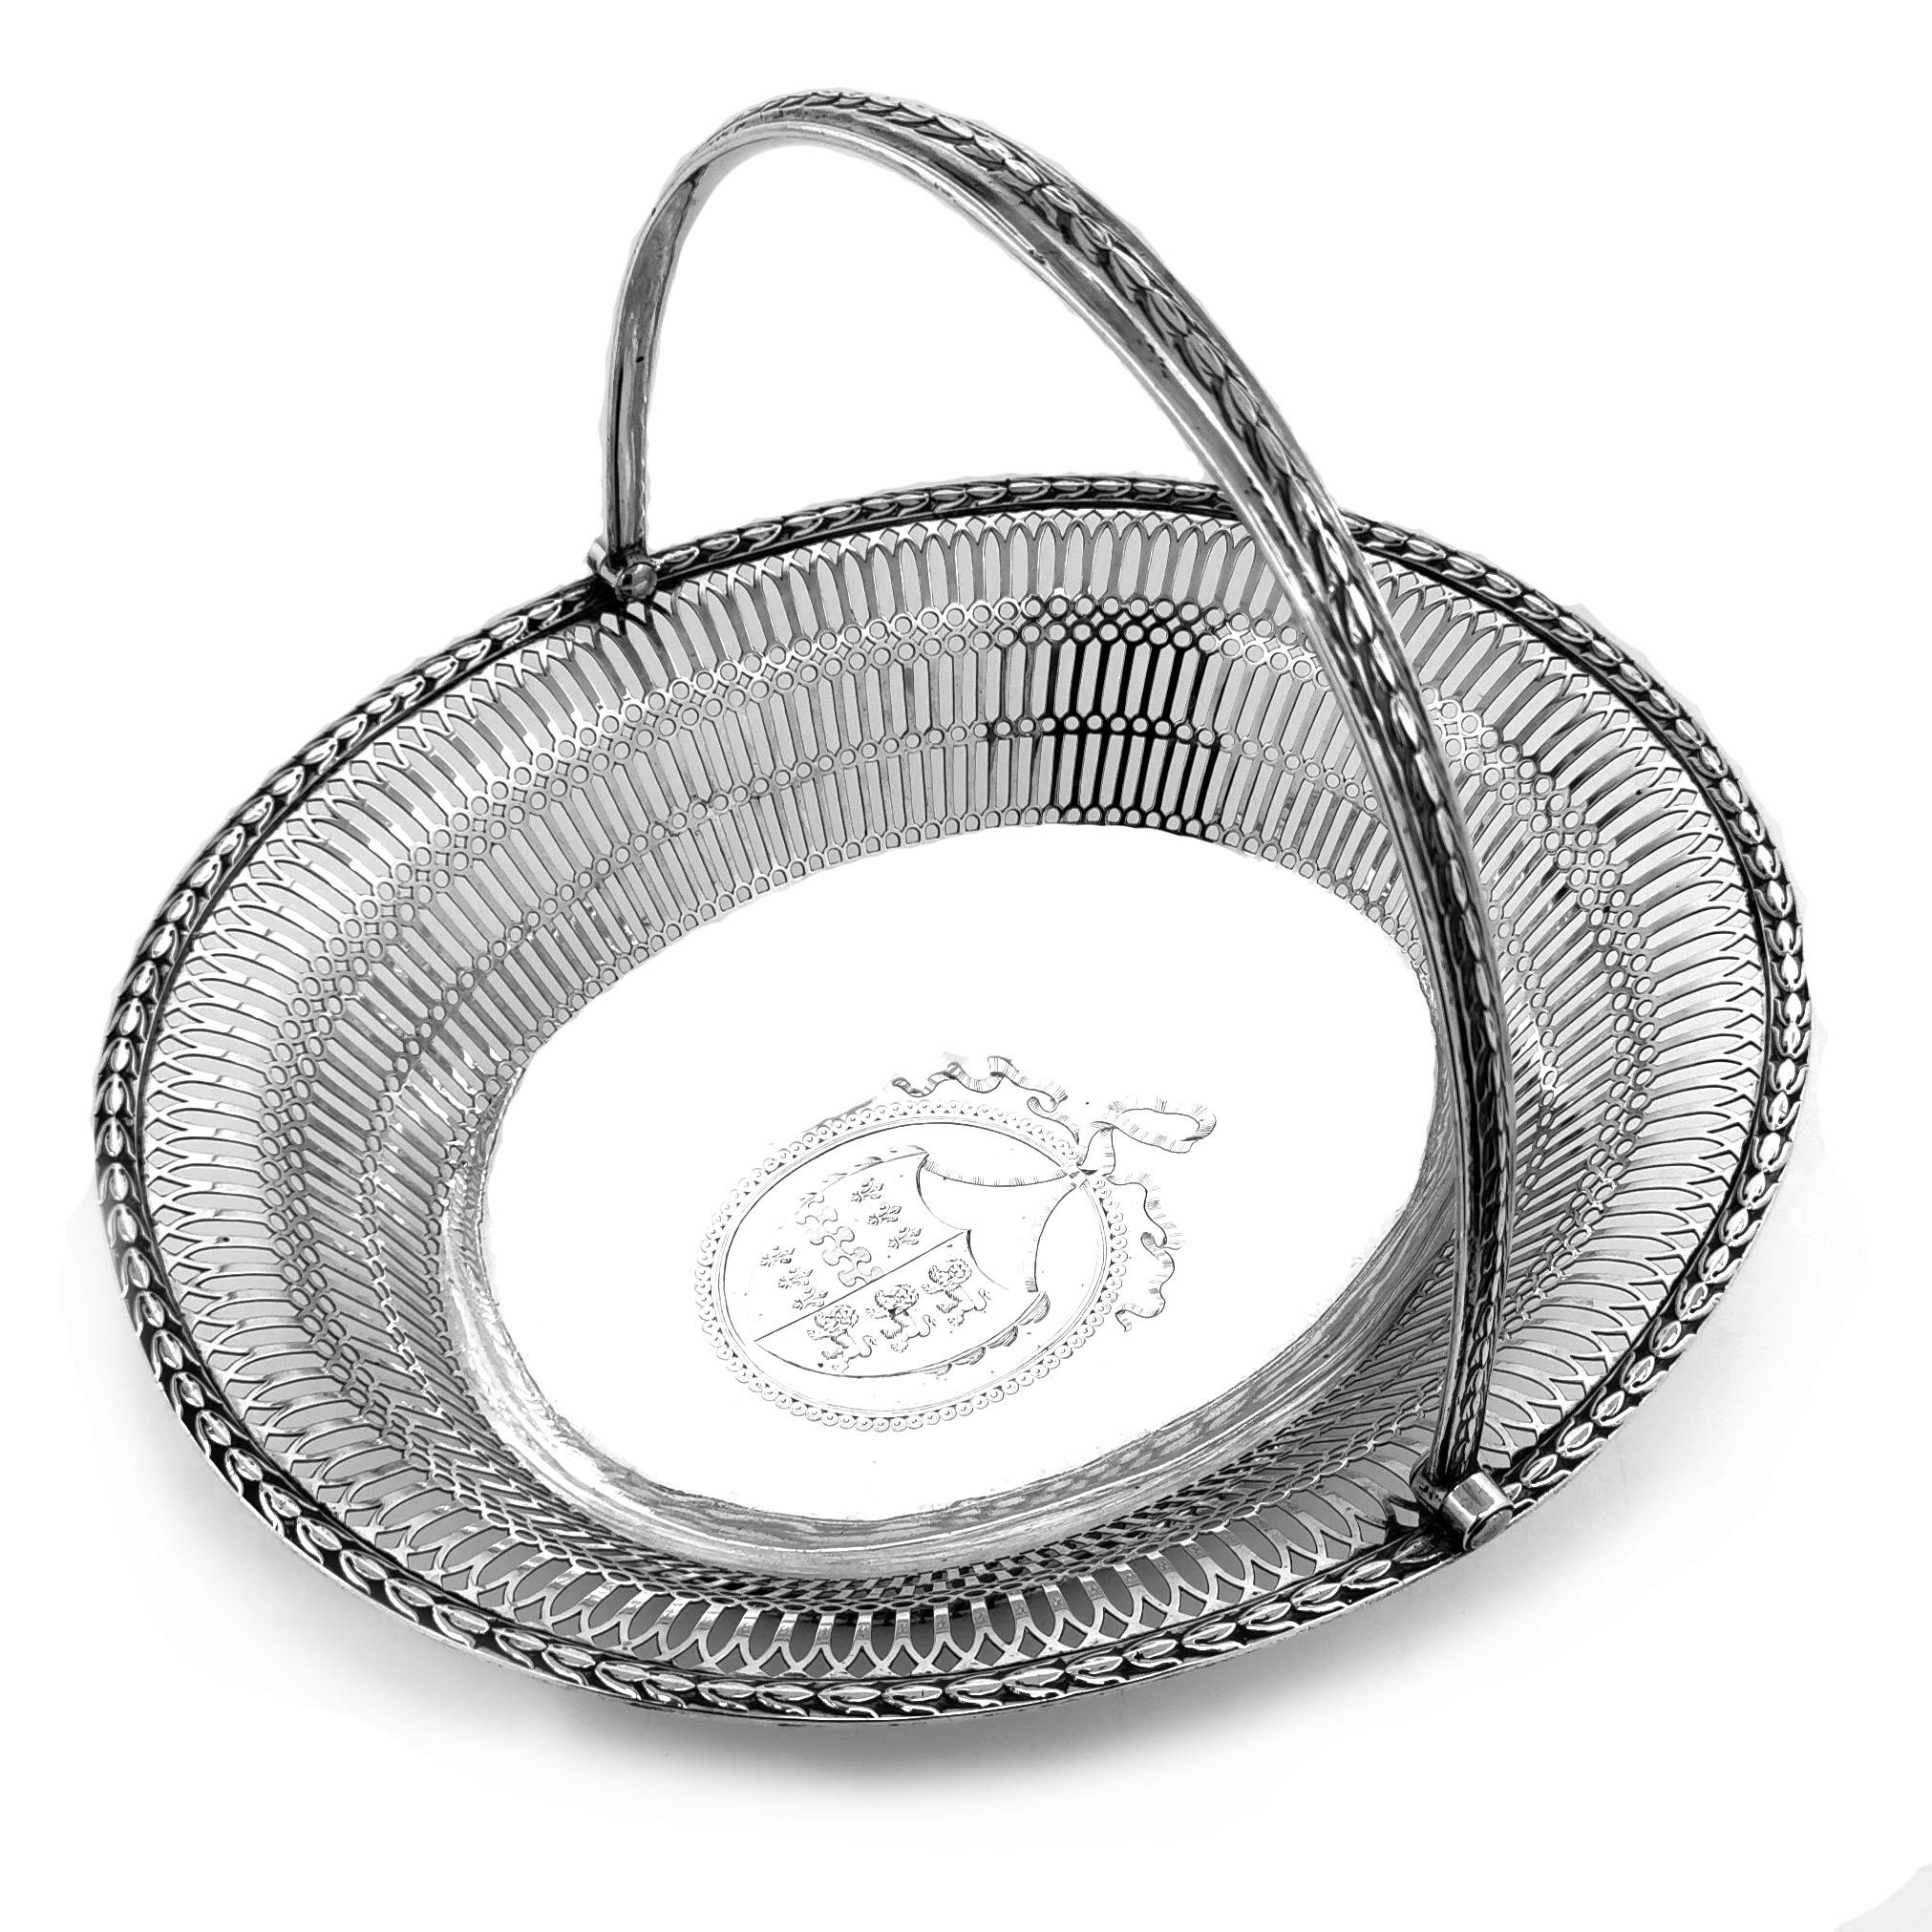 English Antique Georgian Sterling Silver Basket 1774 Cake Bread Serving Swing Handle For Sale